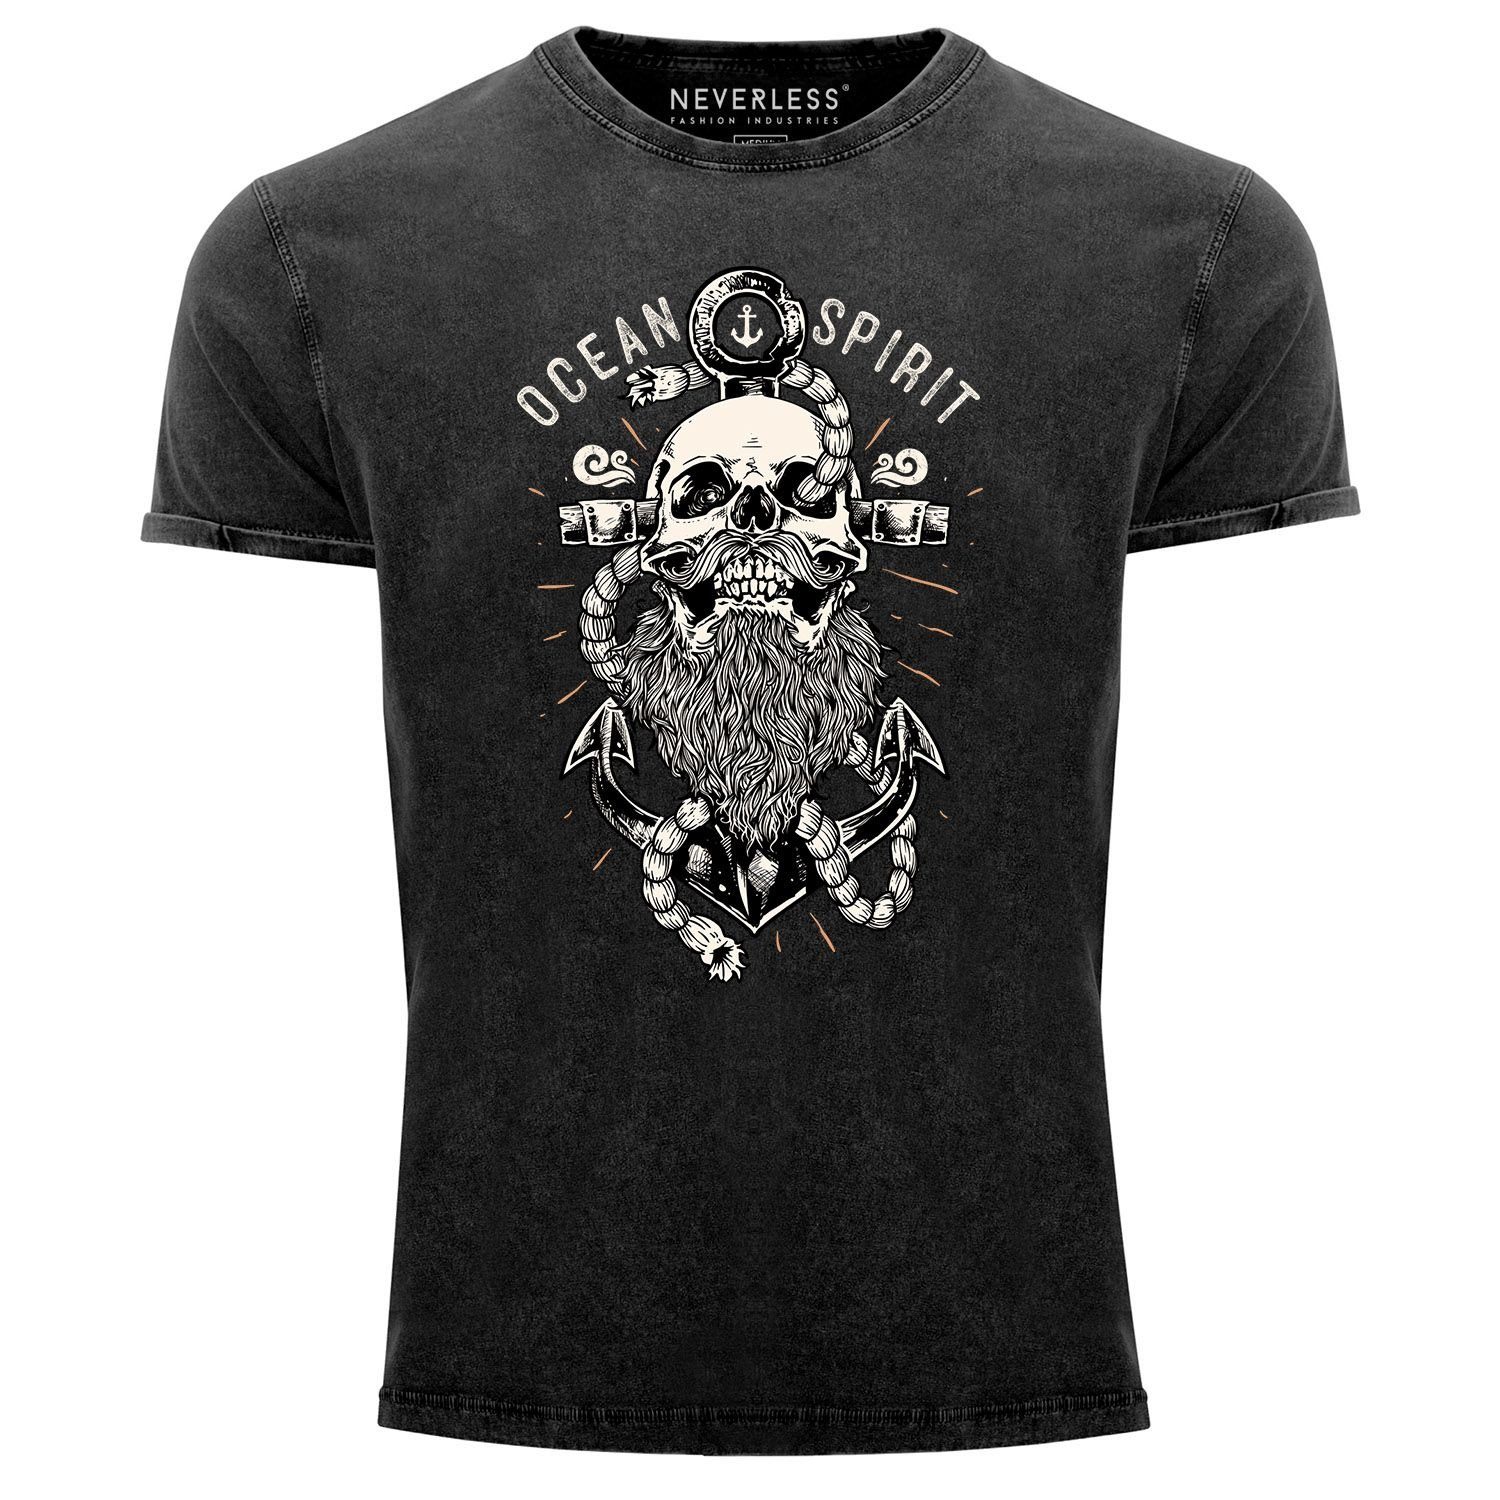 Neverless Print-Shirt Neverless® Herren T-Shirt Vintage Shirt Printshirt Skull Captain Anker Totenkopf Bart Kapitän Ocean Spirit Aufdruck Used Look Slim Fit mit Print